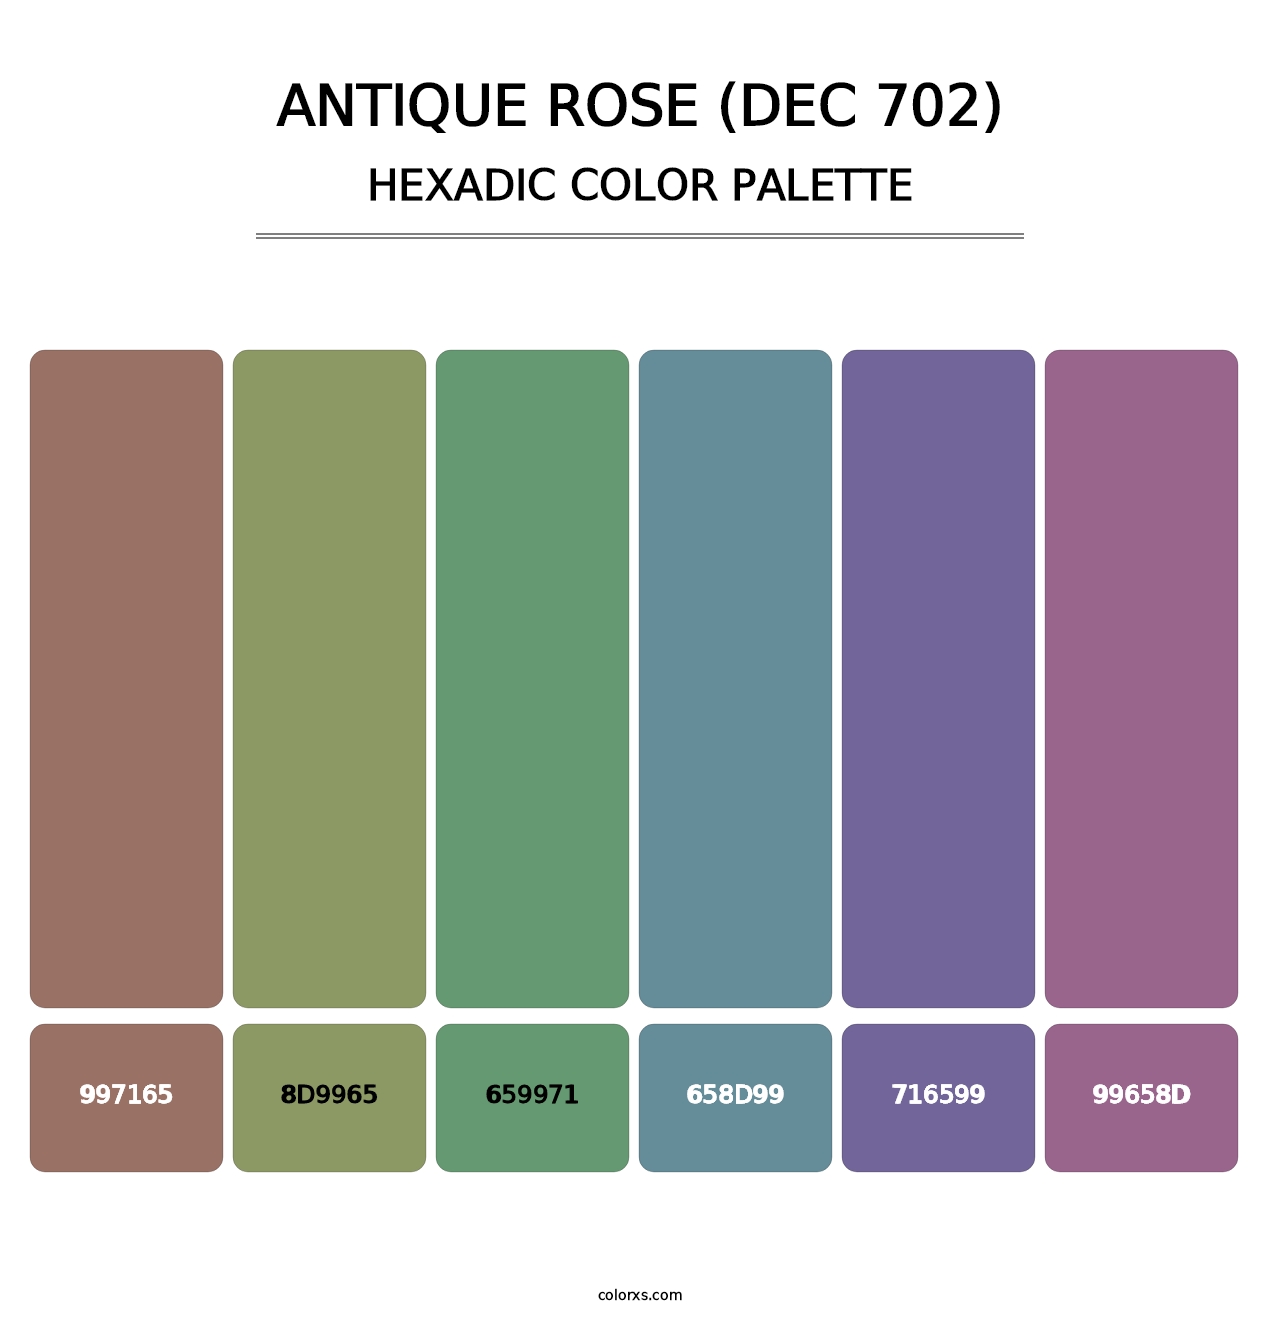 Antique Rose (DEC 702) - Hexadic Color Palette